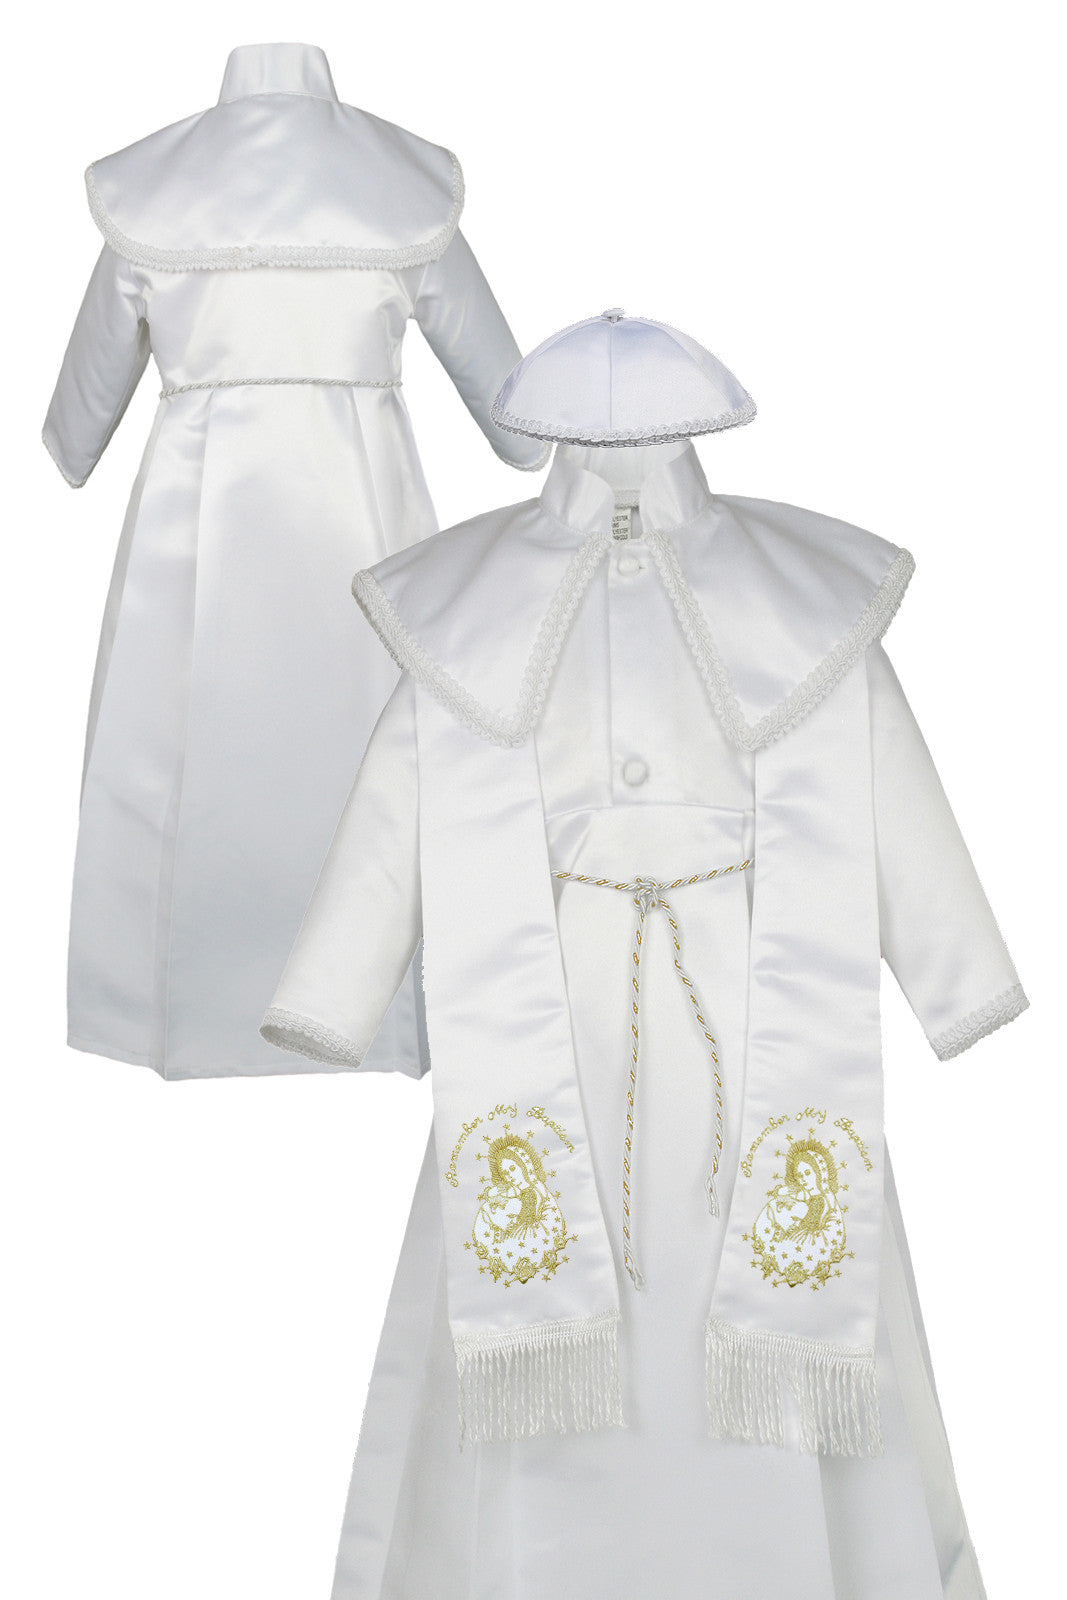 plain christening gown